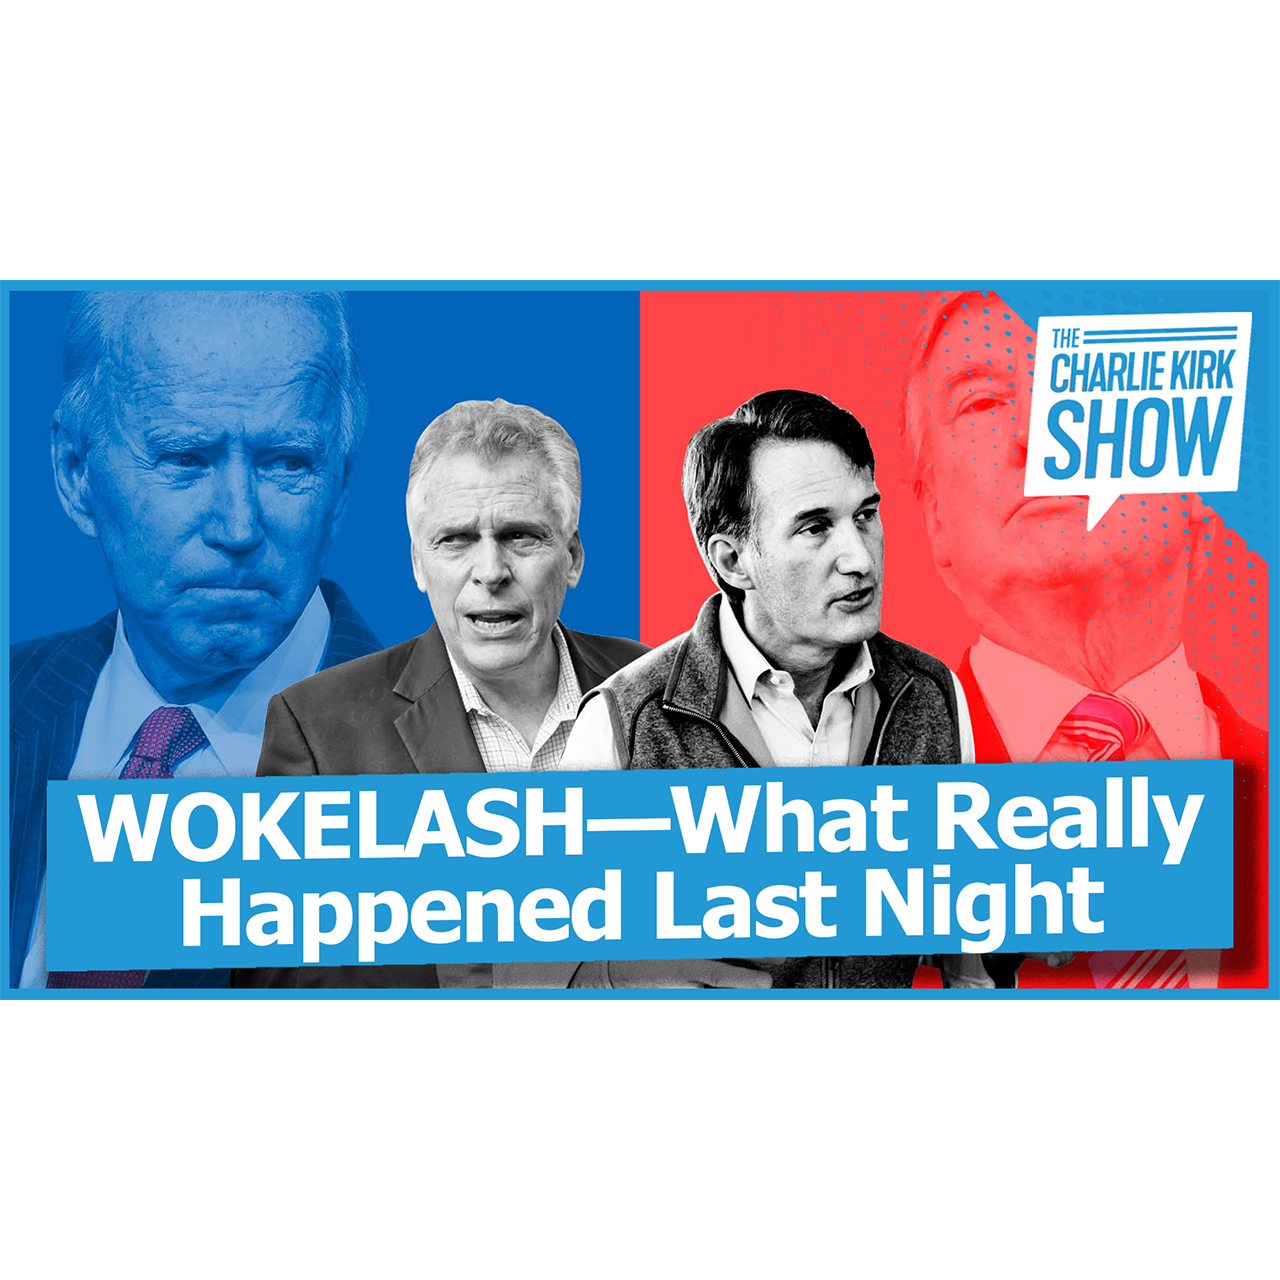 WOKELASH—What Really Happened Last Night